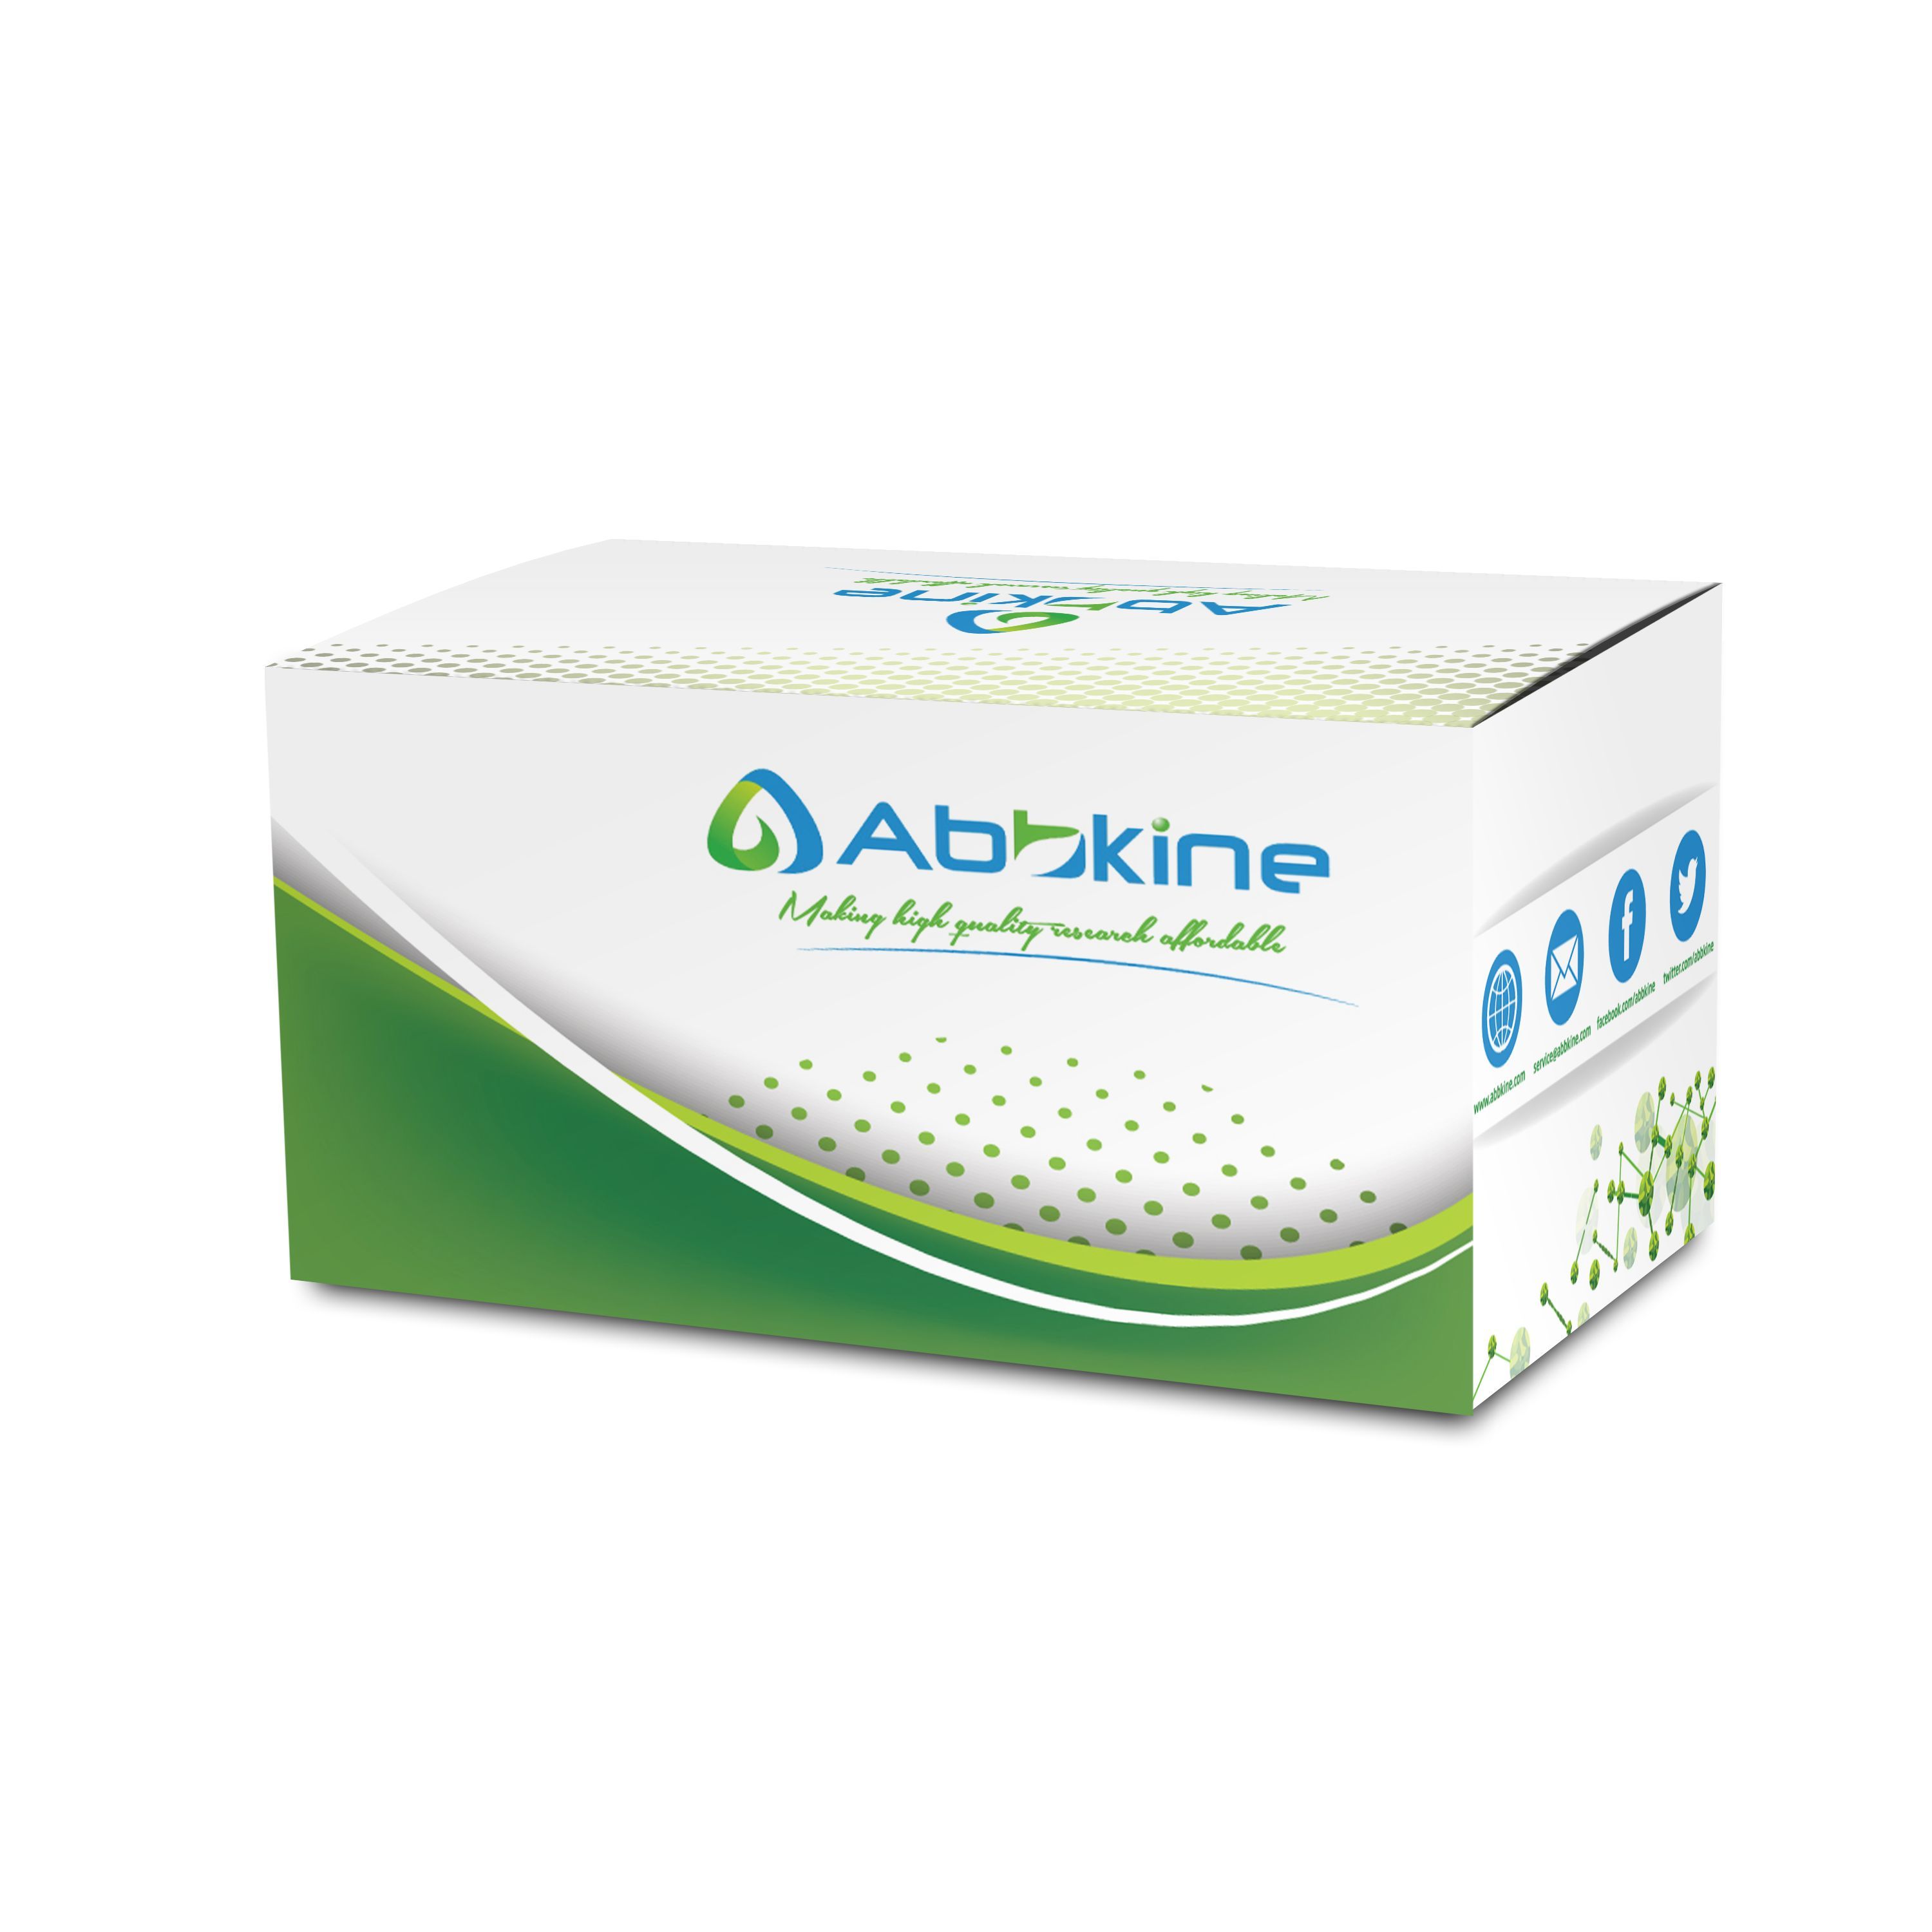 CheKine™ 乙酰胆碱酯酶（AchE）活性检测试剂盒（比色法）/CheKine™ Acetylcholinesterase (AchE) Activity Colorimetric Assay Kit